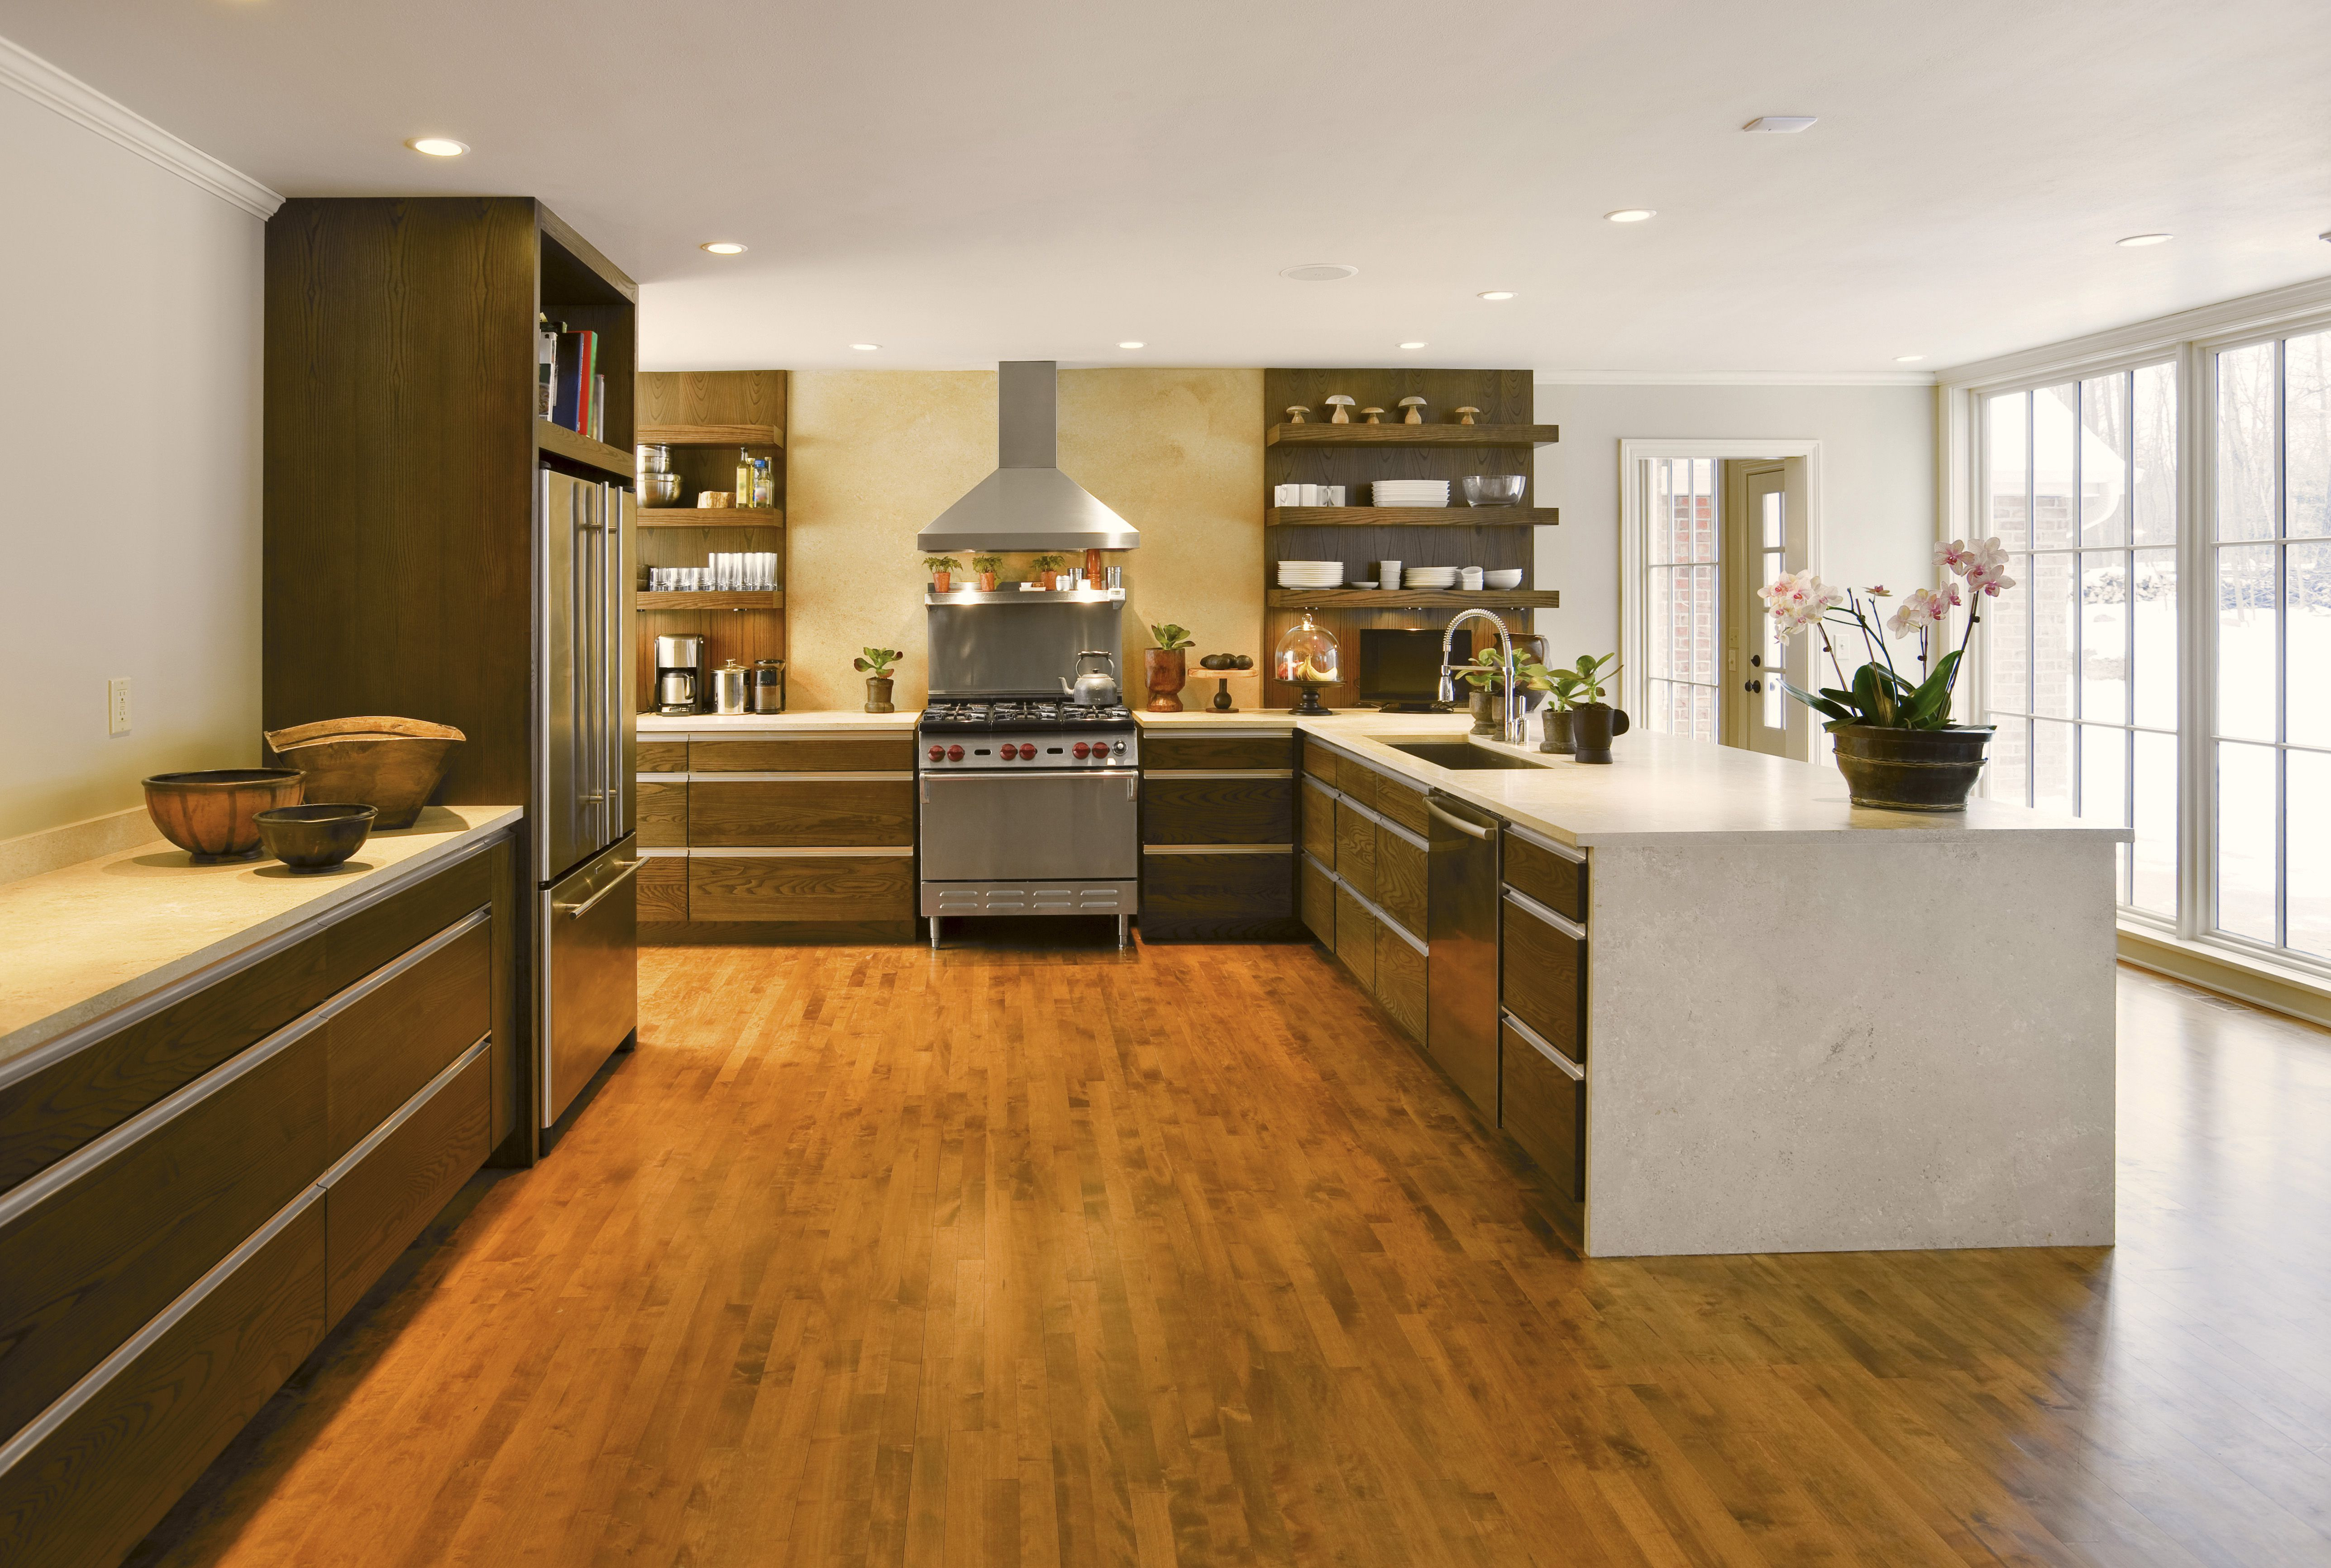 Blue Bell Hardwood Flooring Of the Best Flooring Options for Senior Citizens within Modern Kitchen 88801369 59fd2f77b39d0300191aa03c